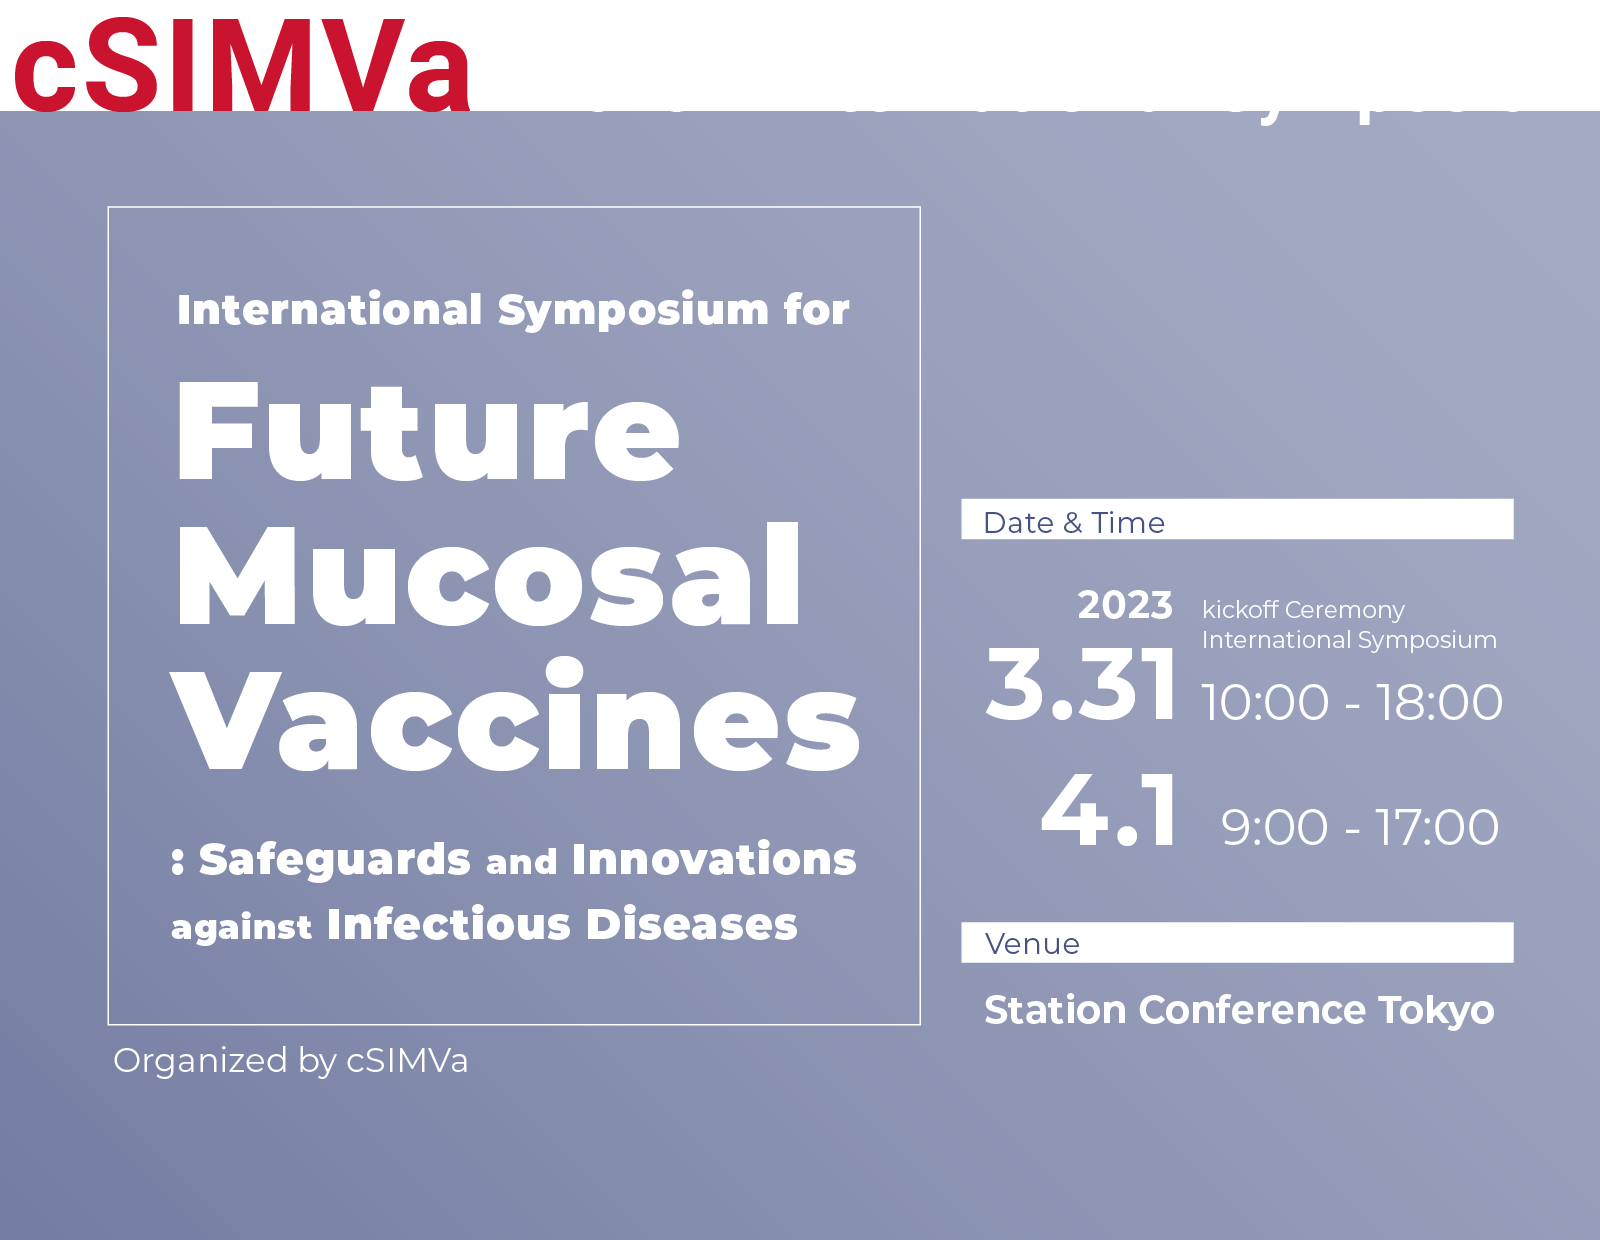 Future Mucosal Vaccines